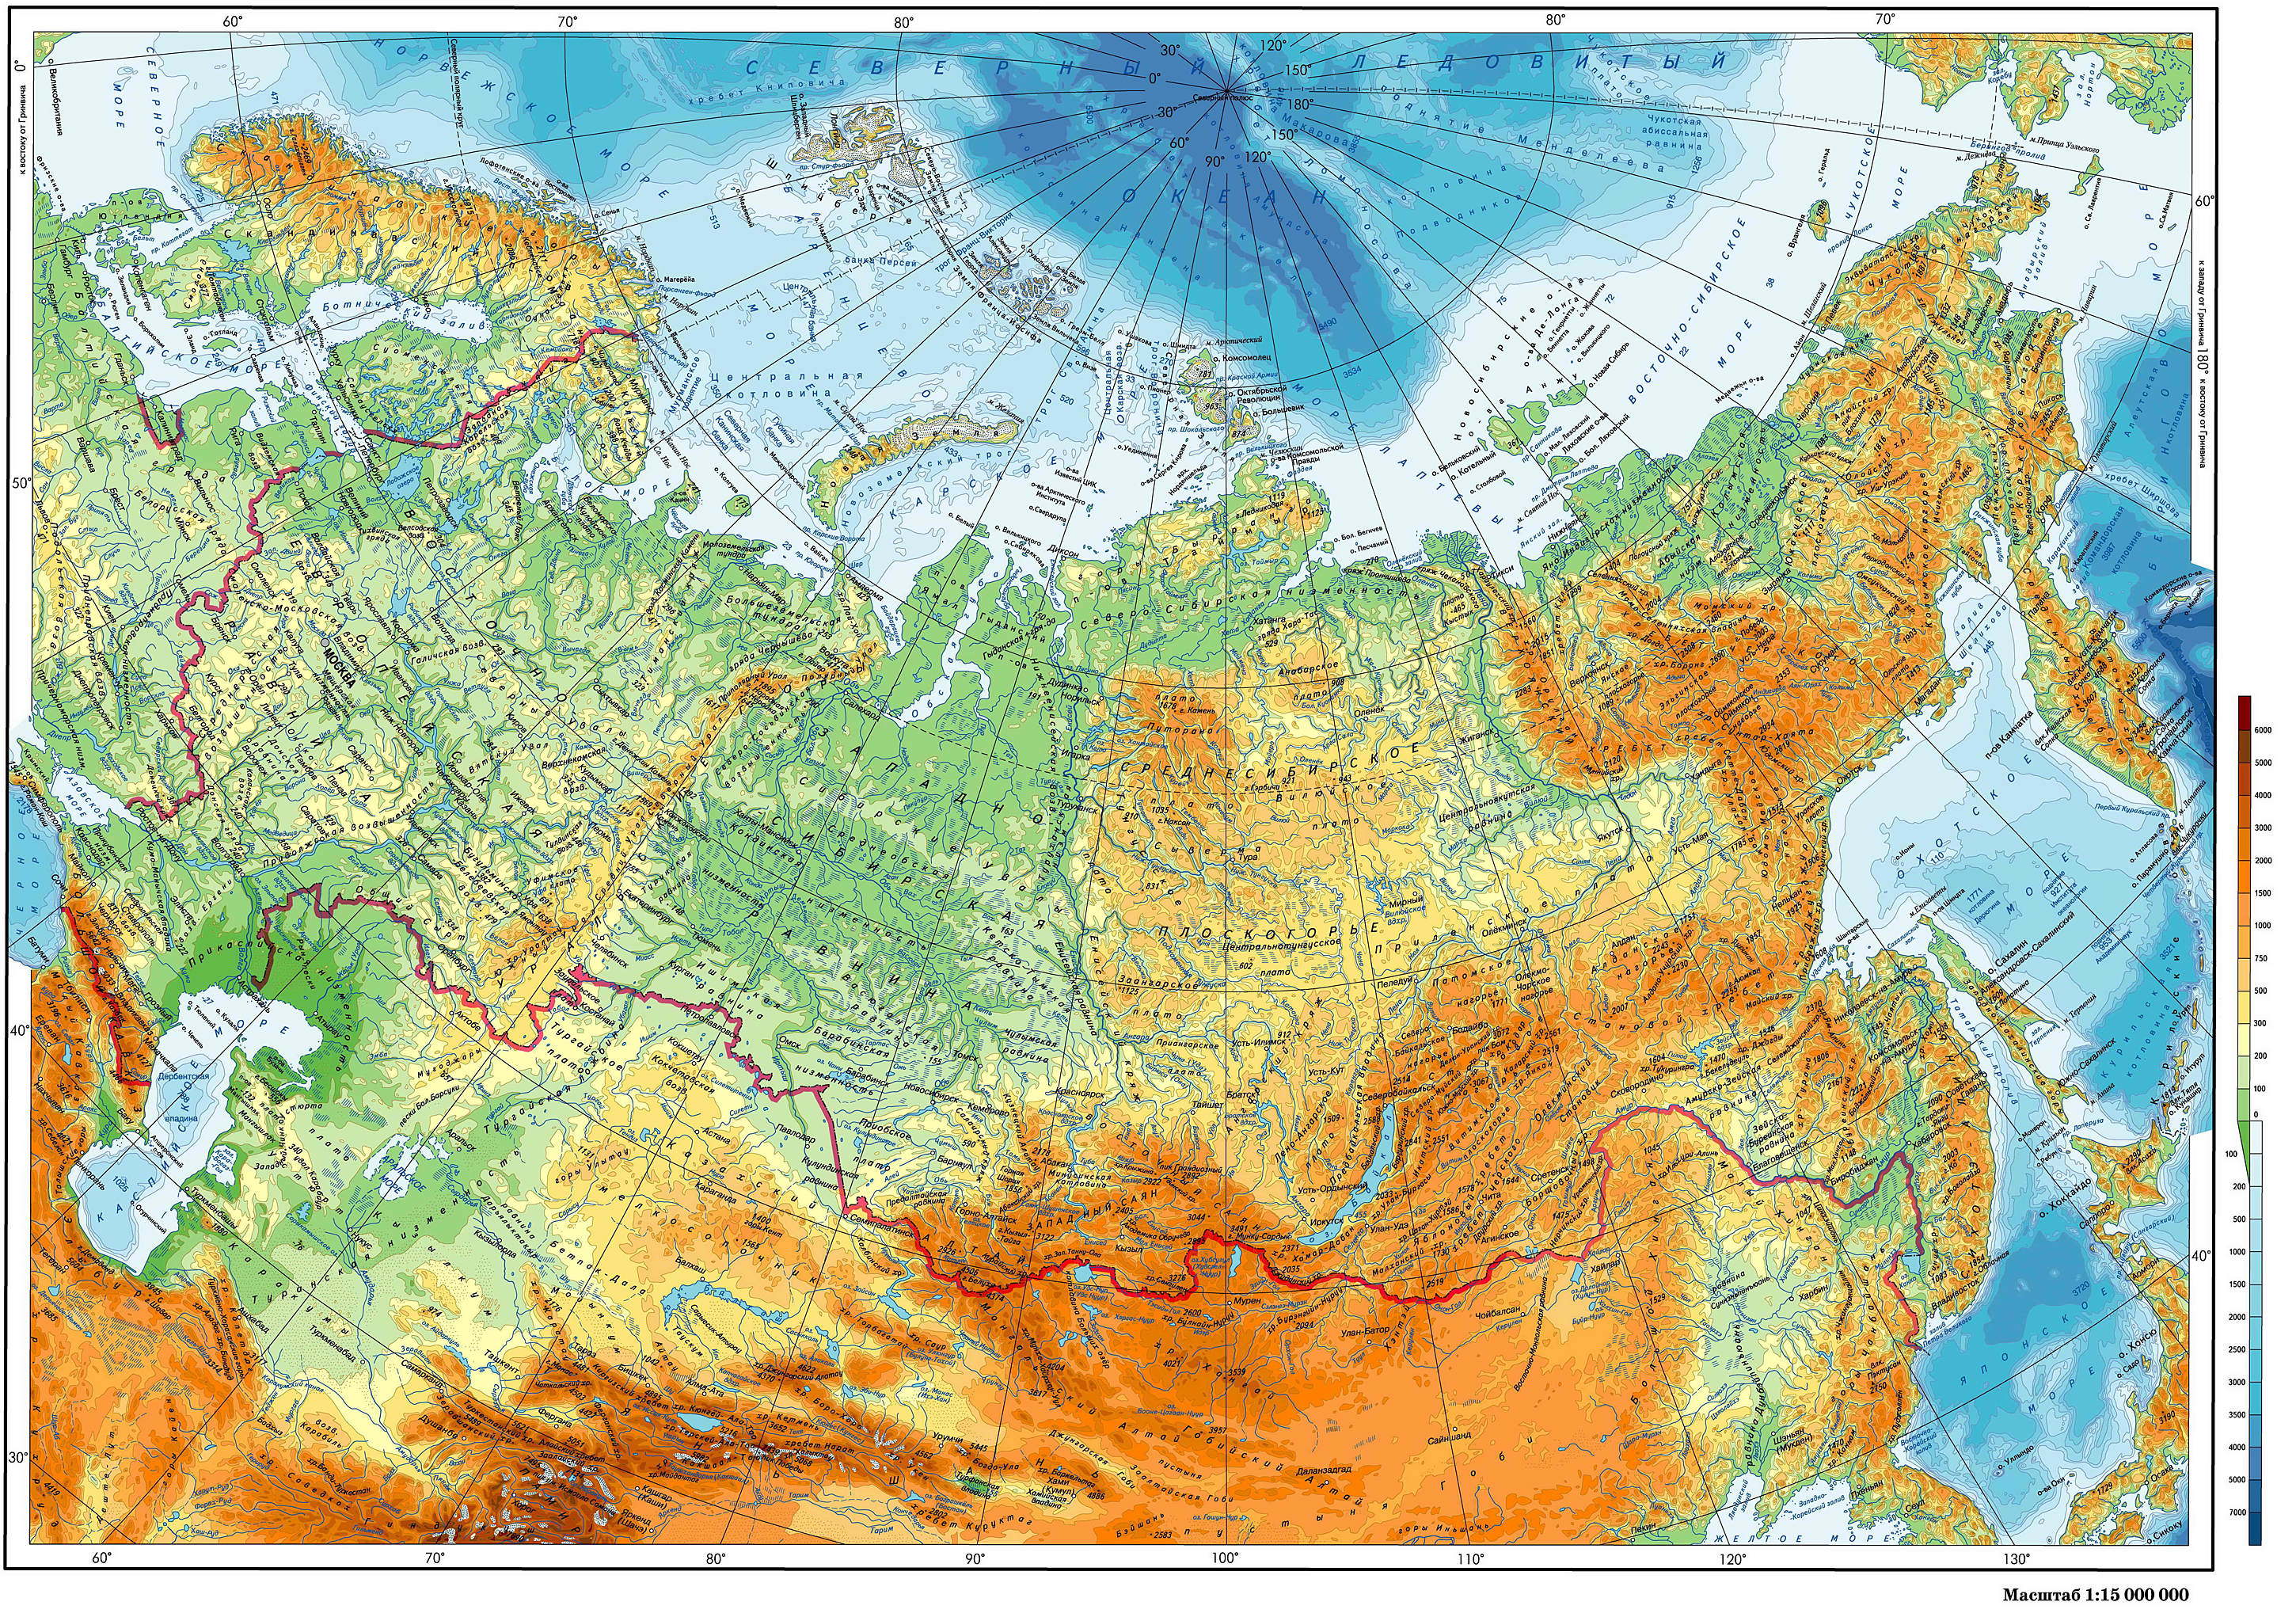 Карта аб россия